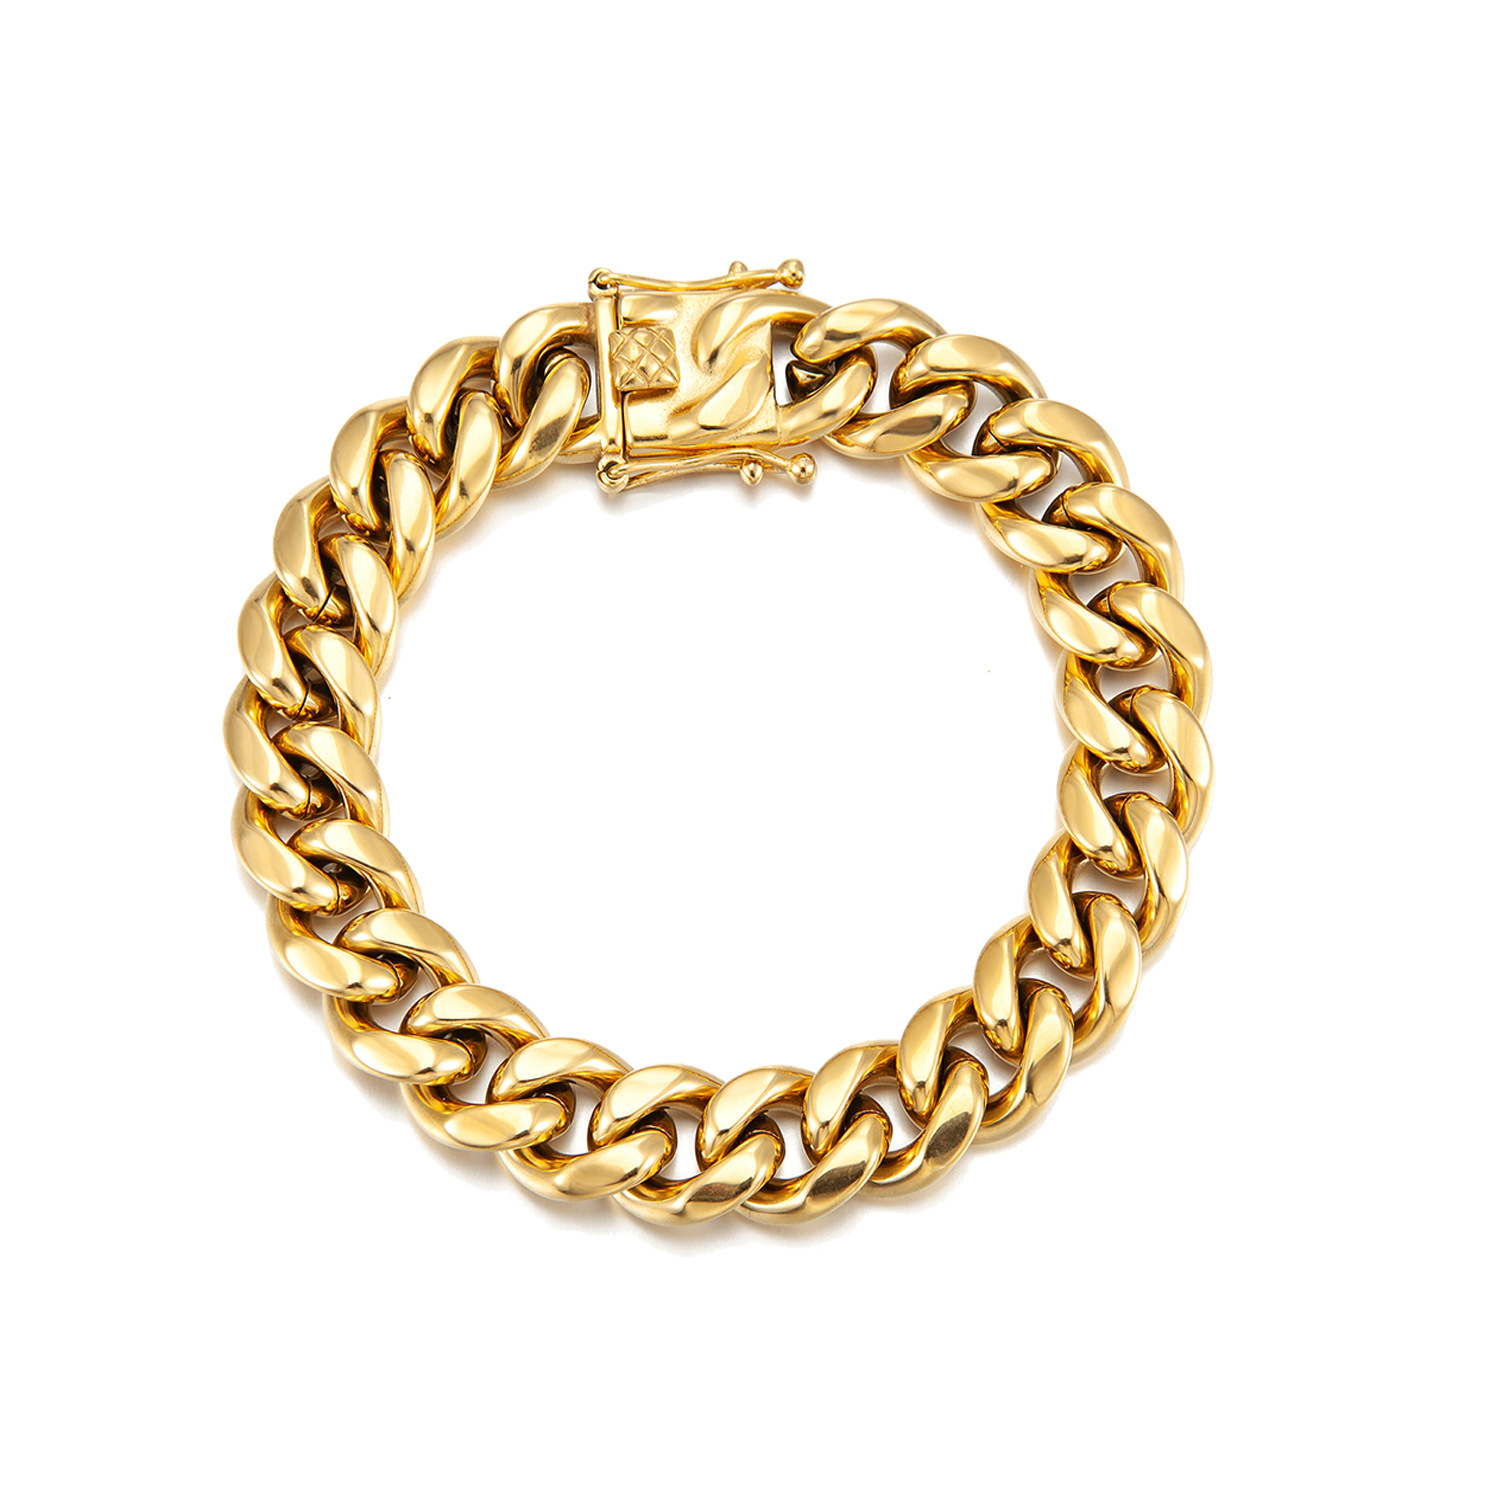 8:Bracelet Gold 10mm*22cm